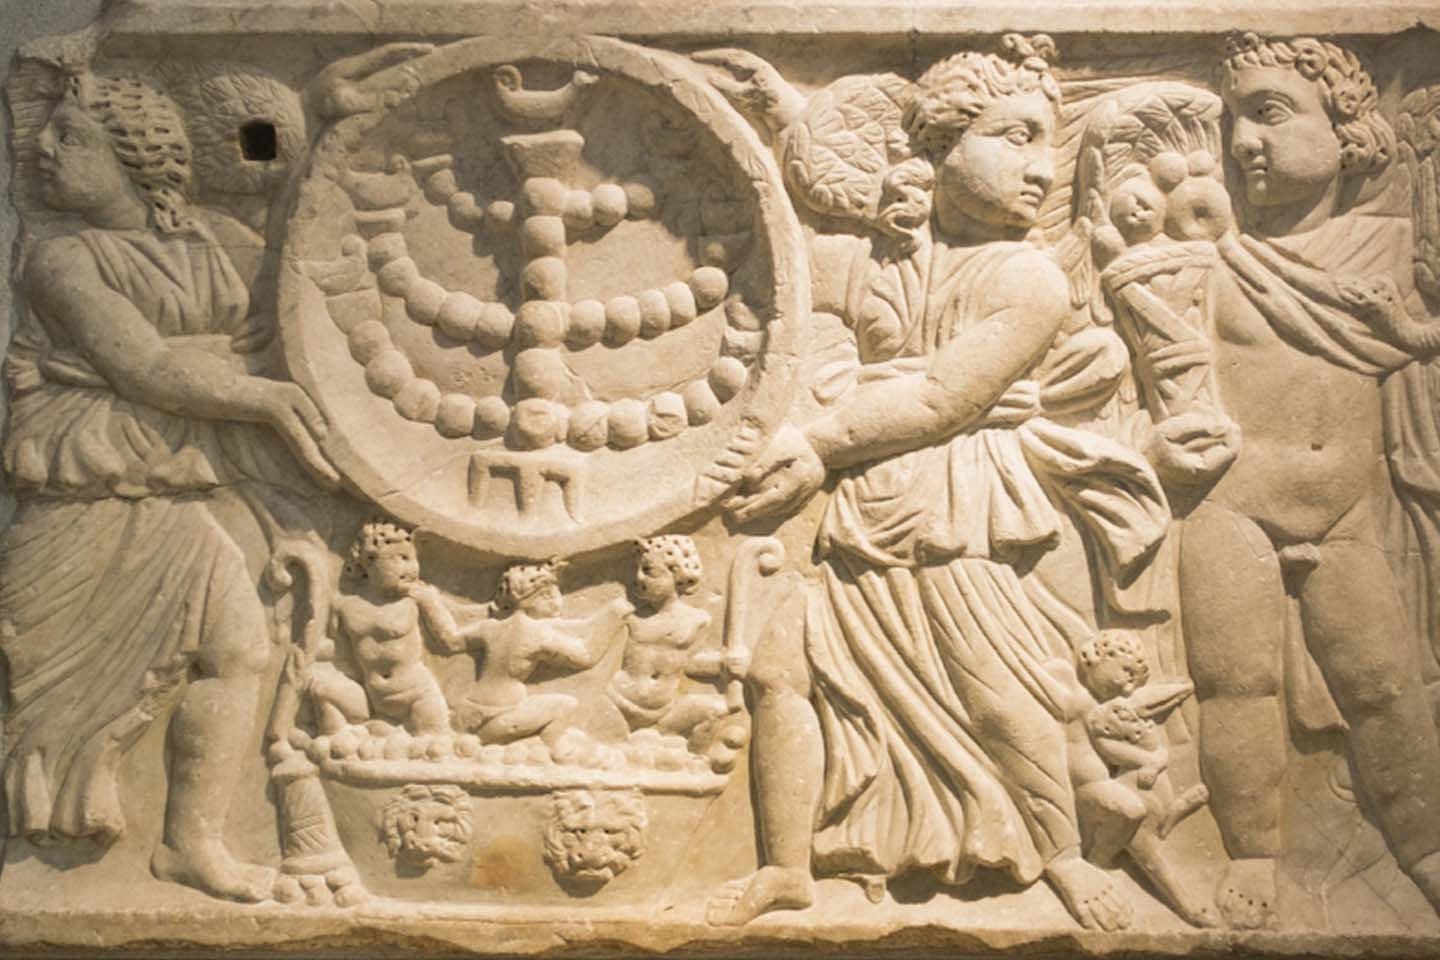 Menorah on Sarcophagus from Rome